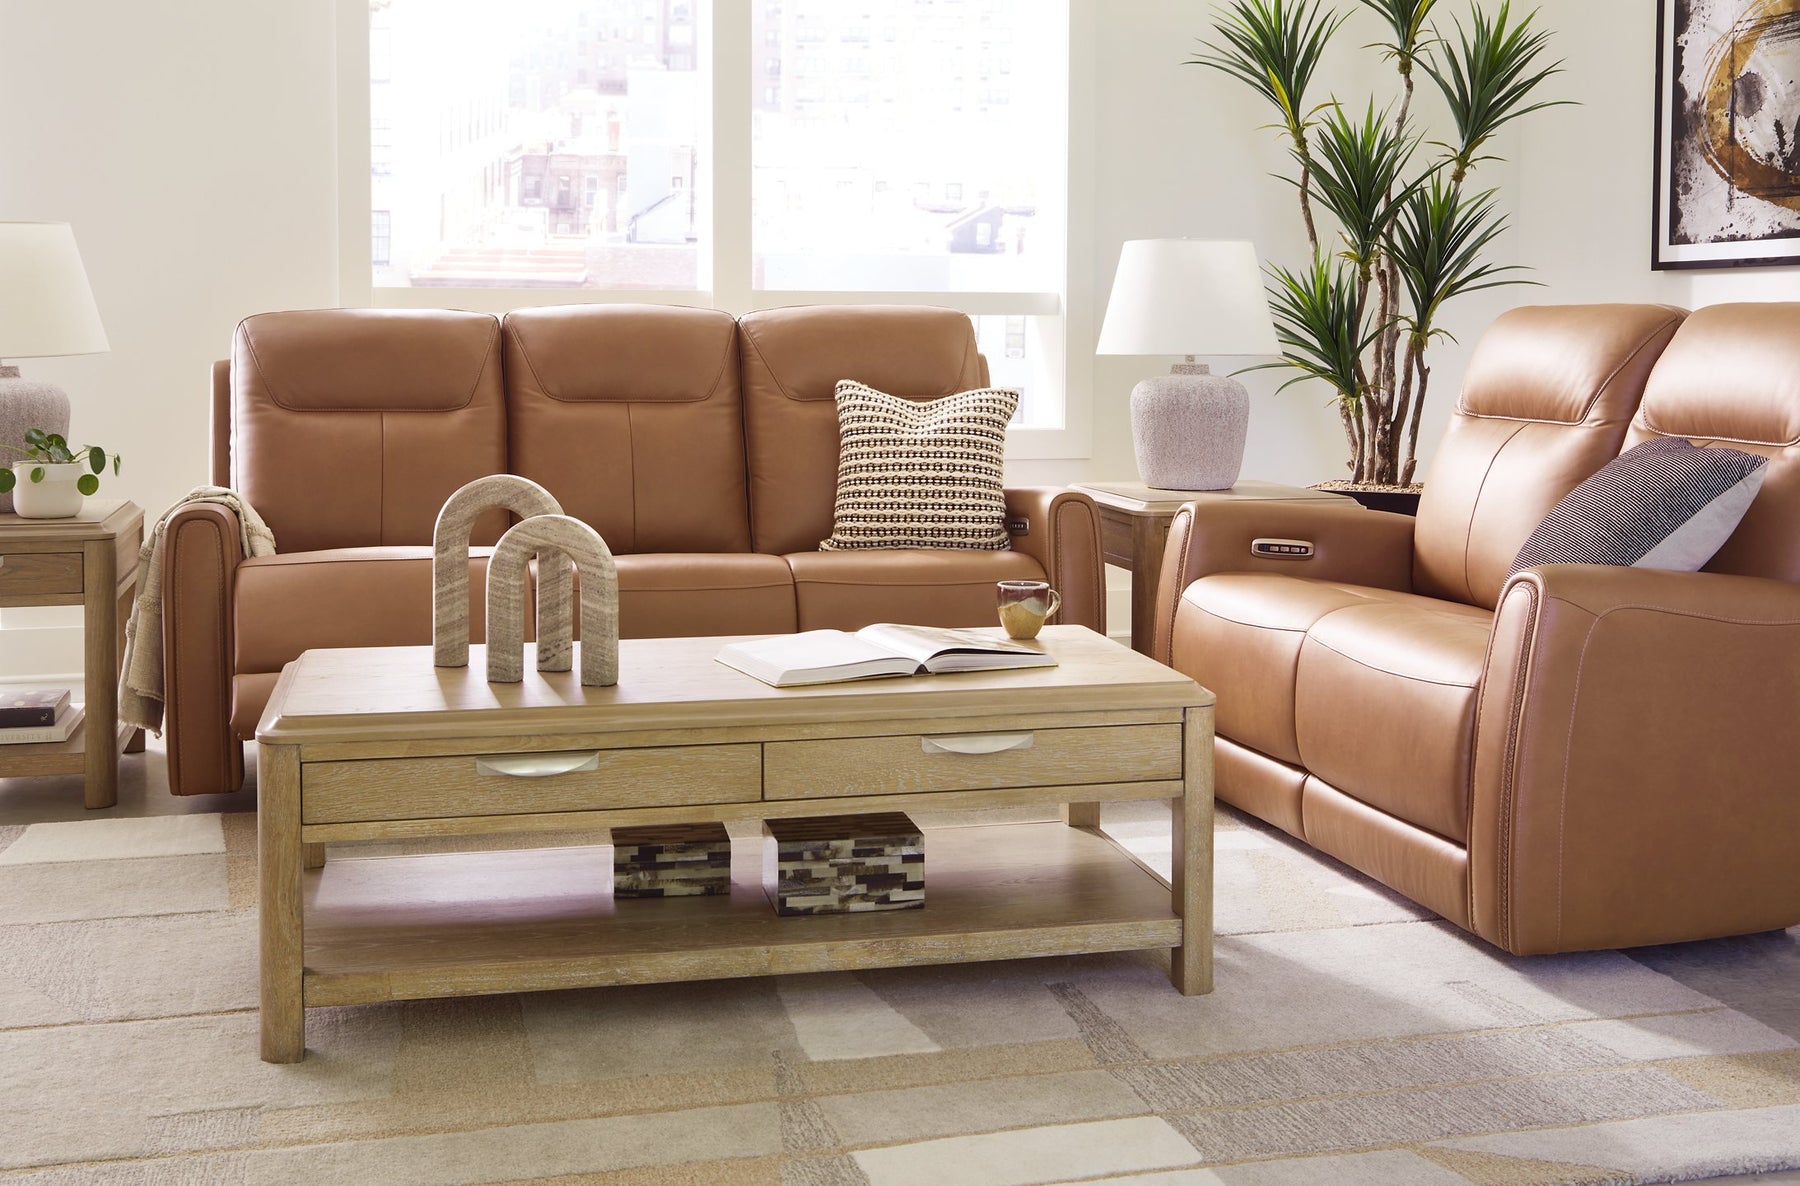 Tryanny Living Room Set - Half Price Furniture